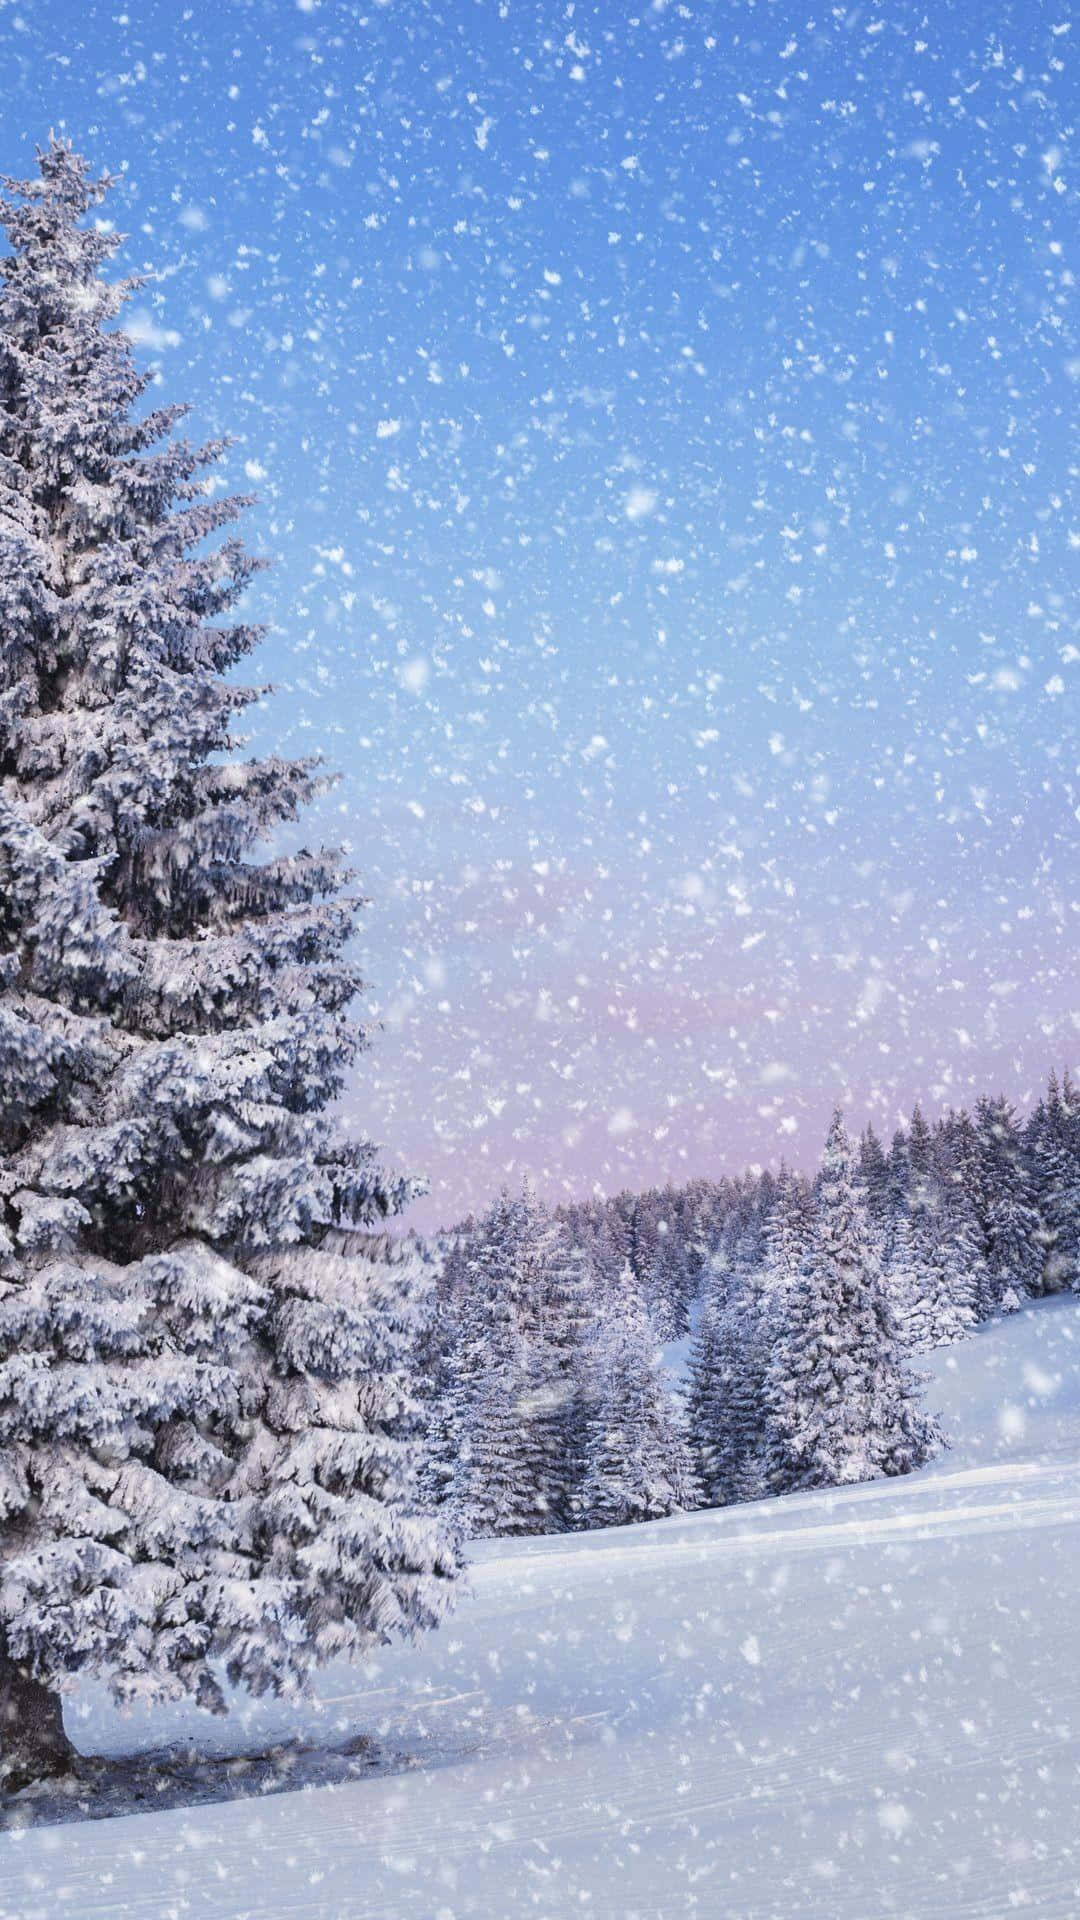 Christmas Holiday Winter Wonderland Background